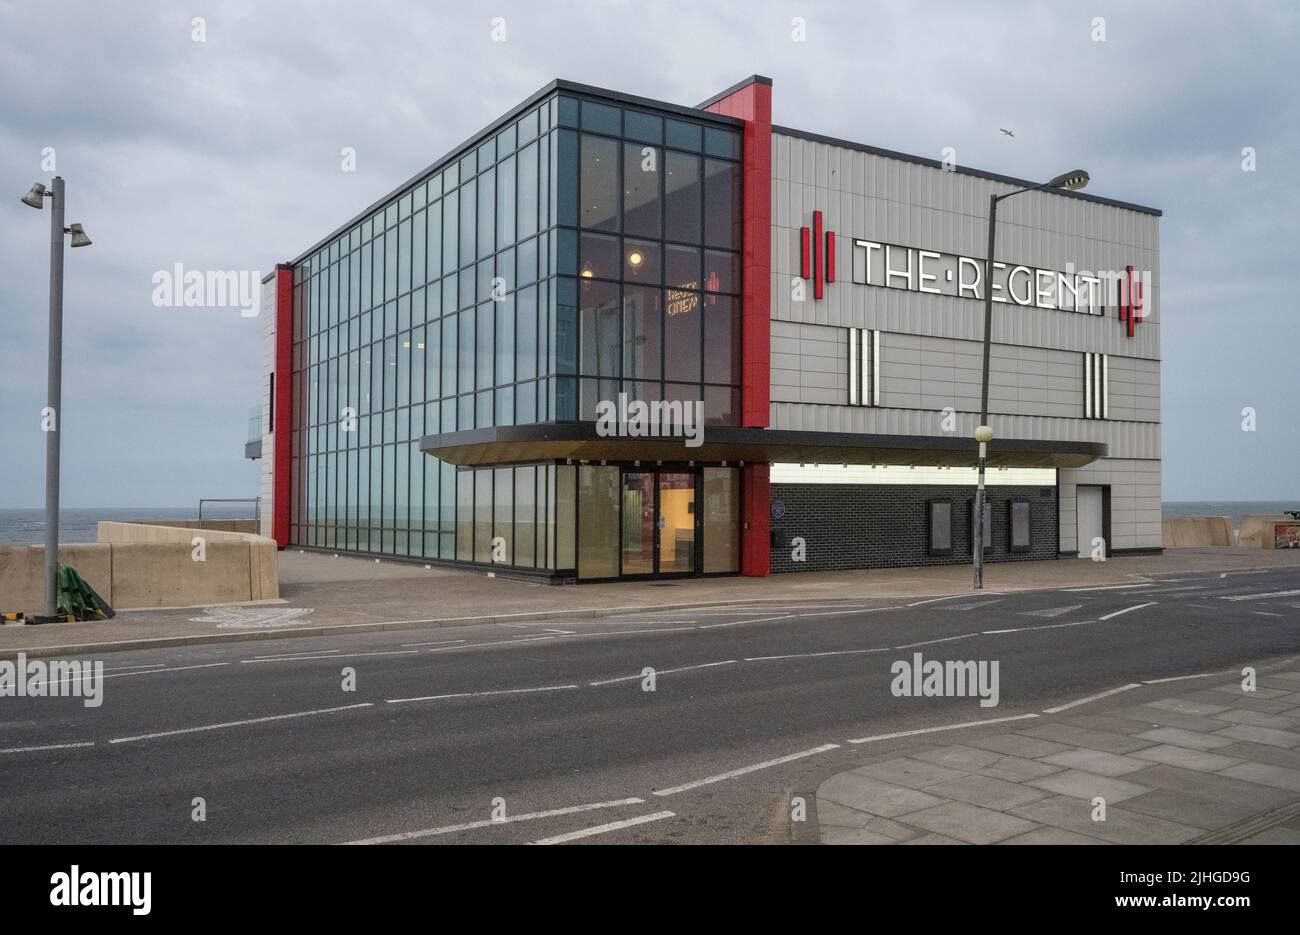 New Regent Cinema in Redcar Stock Photo